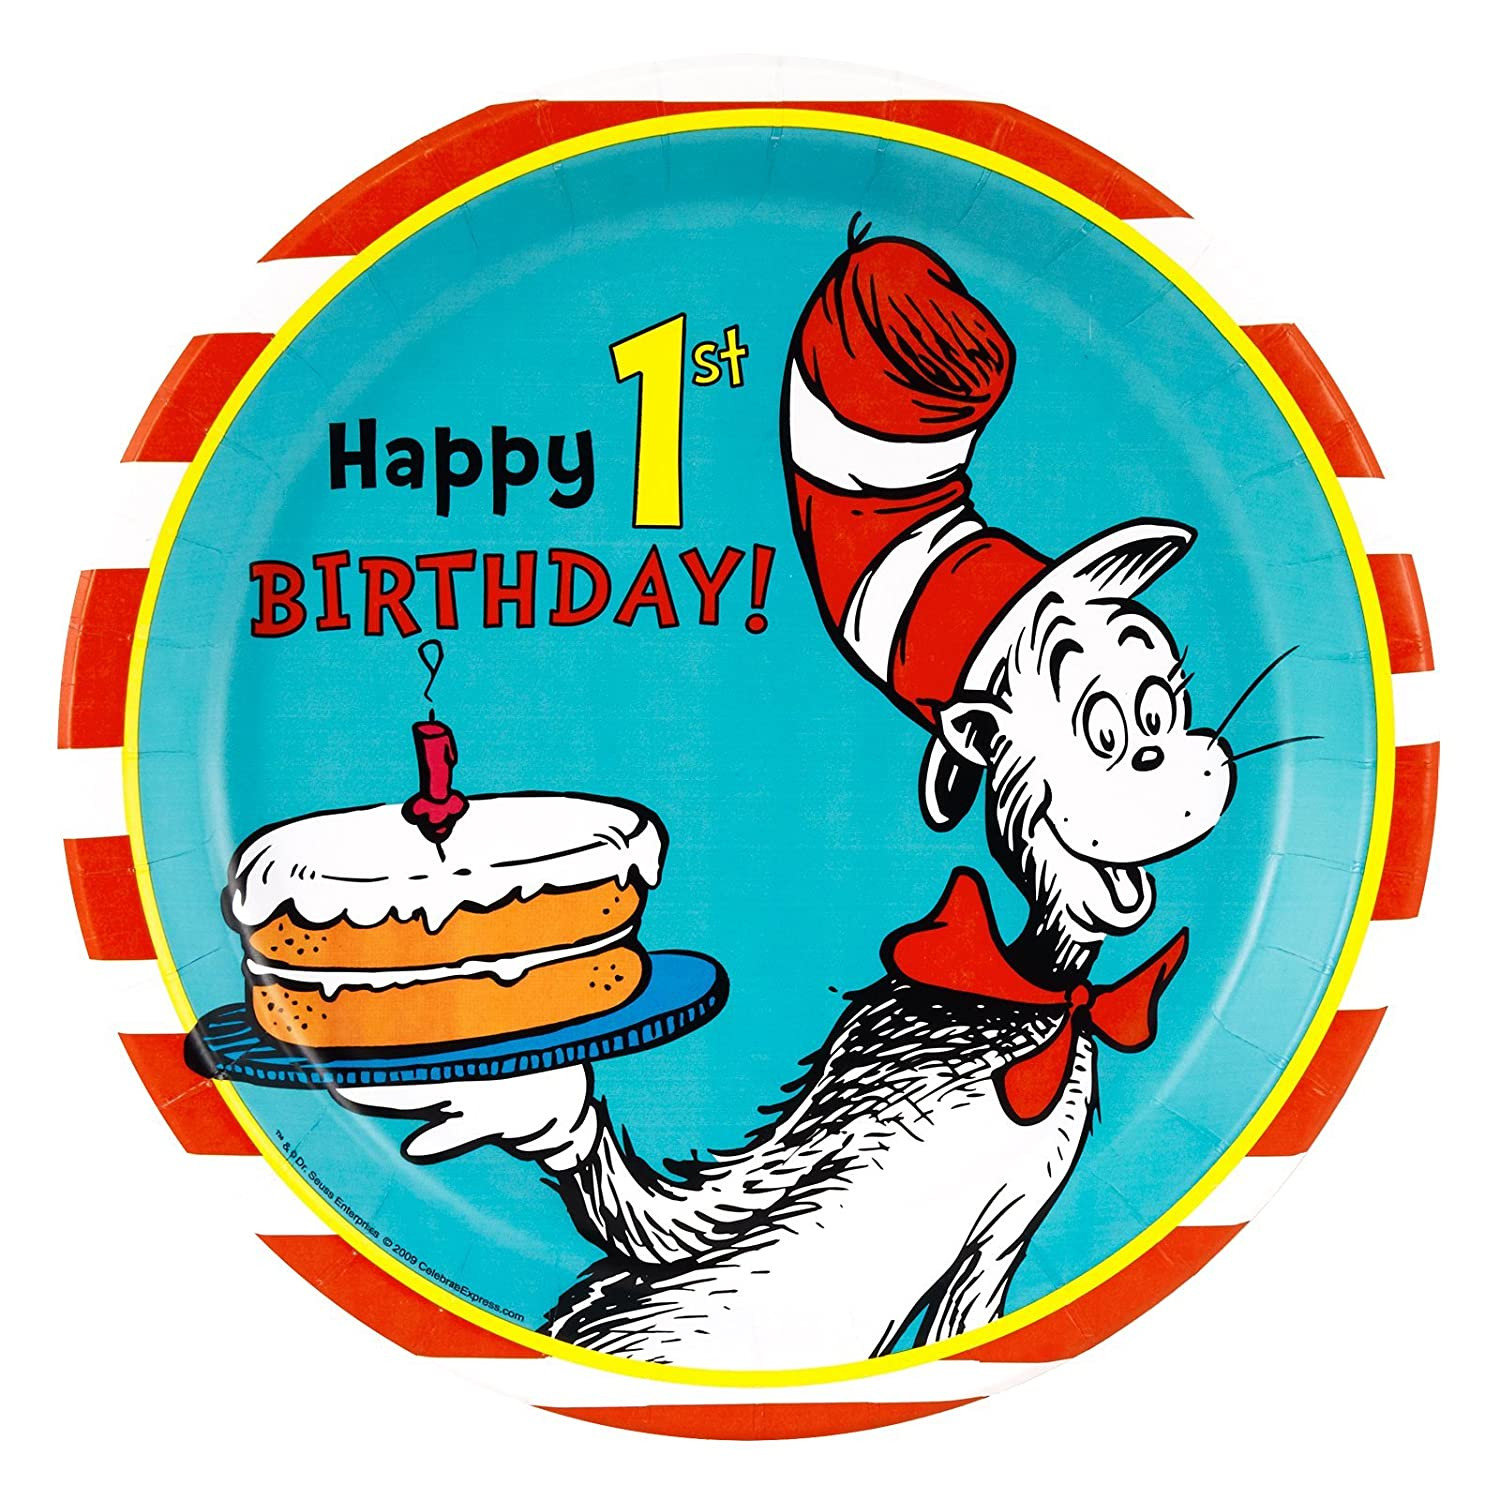 Dr Seuss Party Supplies 1st Birthday
 Dr Seuss 1st Birthday Party Supplies